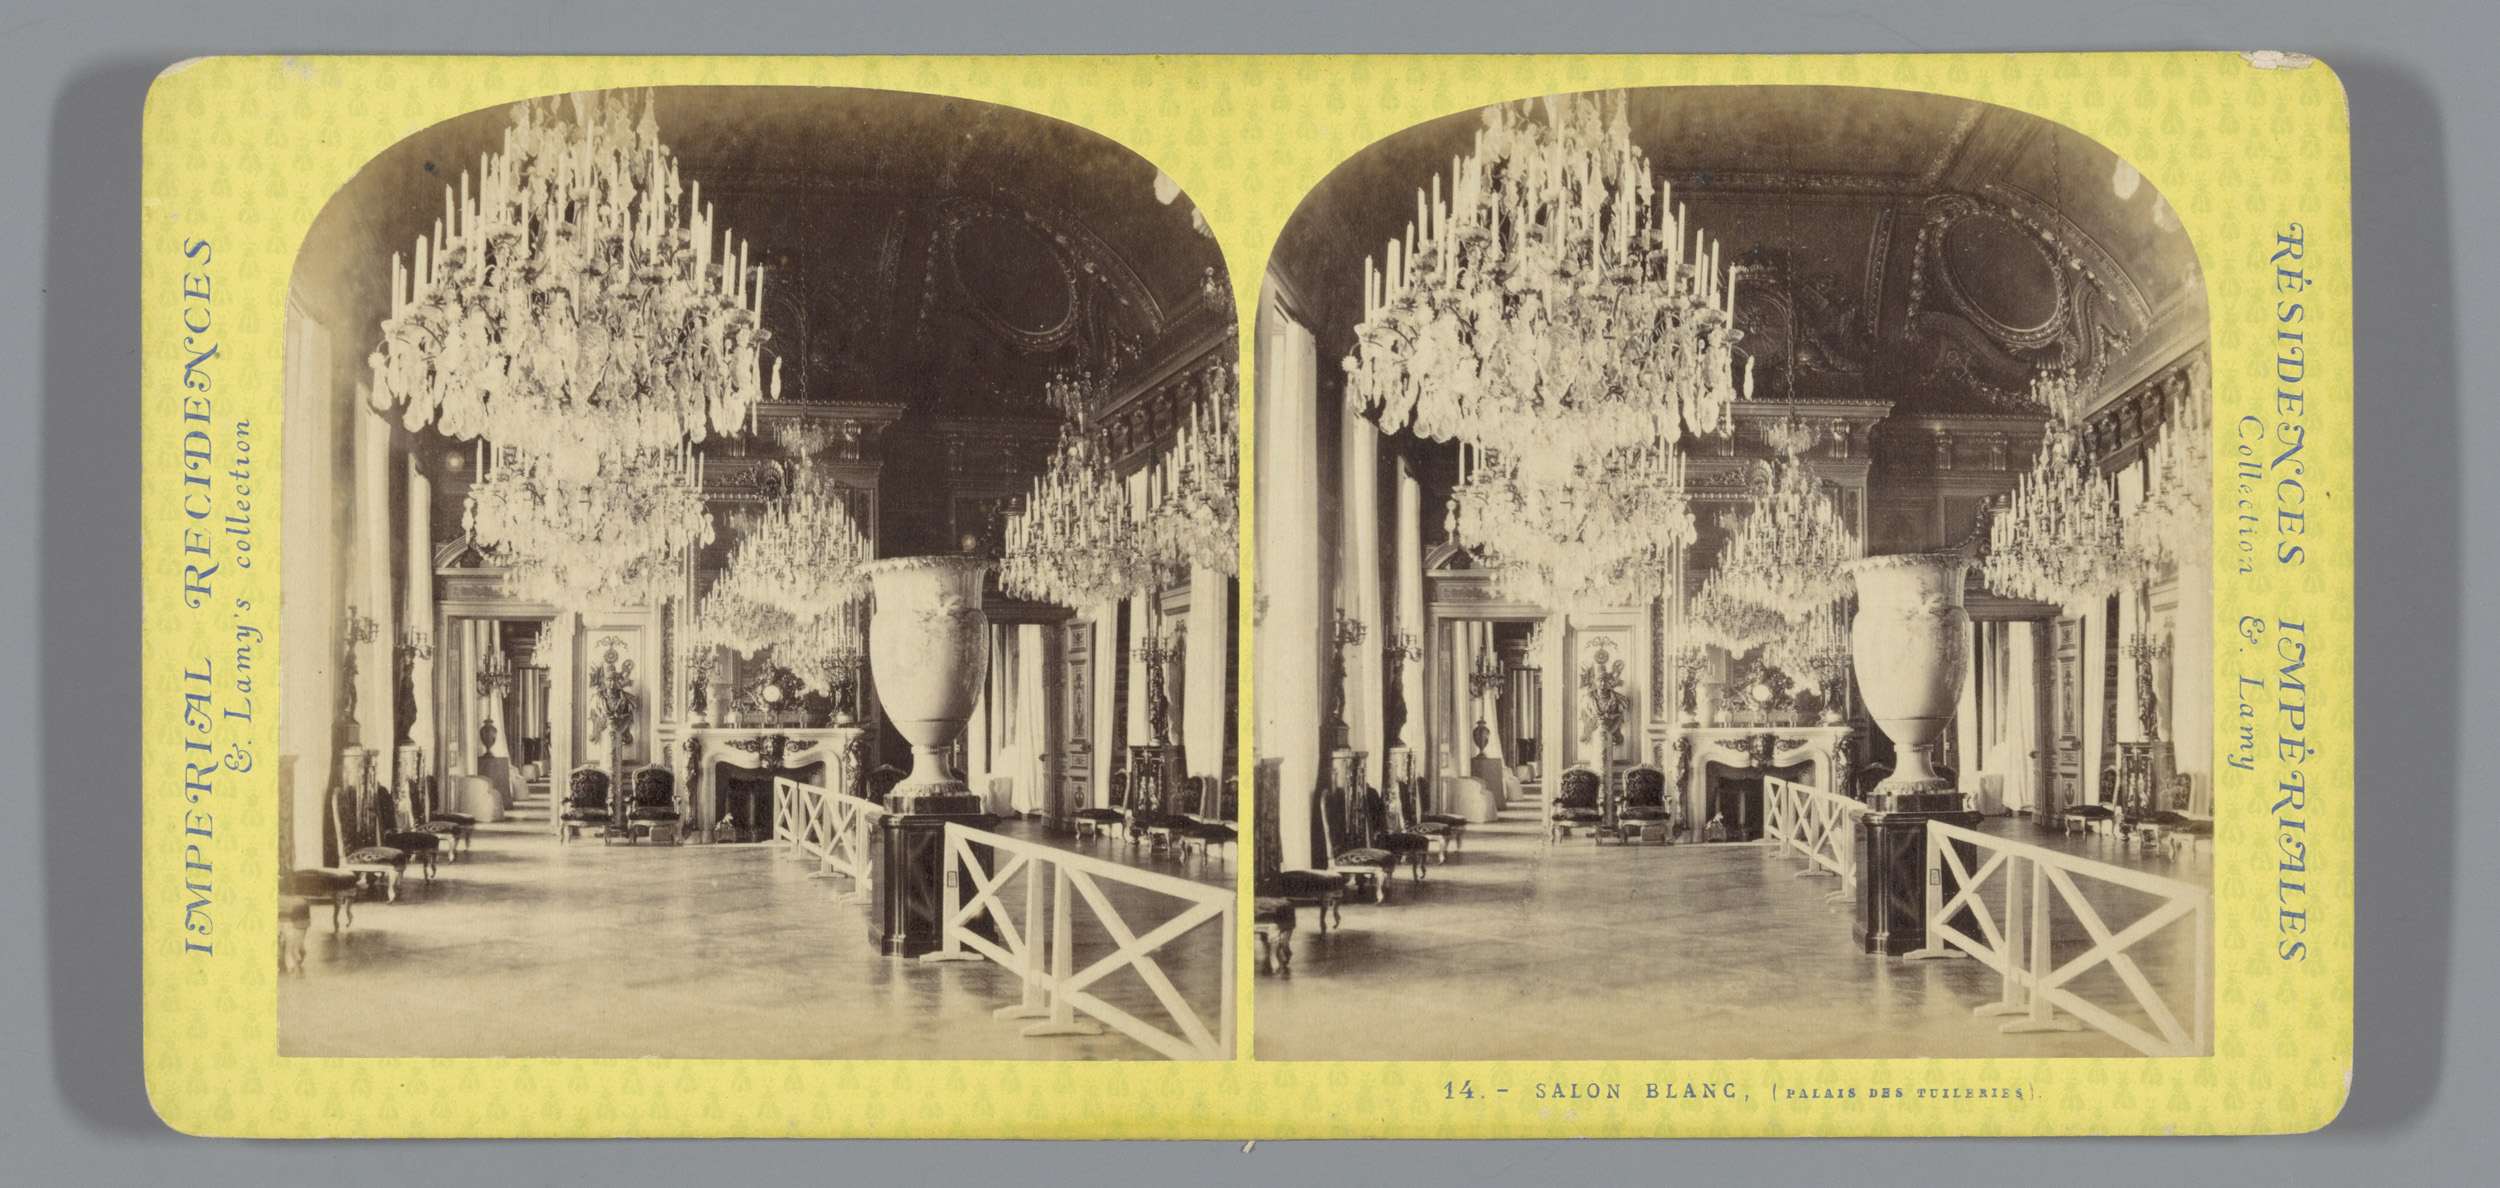 Interior van een salon in the moment Palais des Tuileries in Paris, Salon Blanc, Imperial Residences